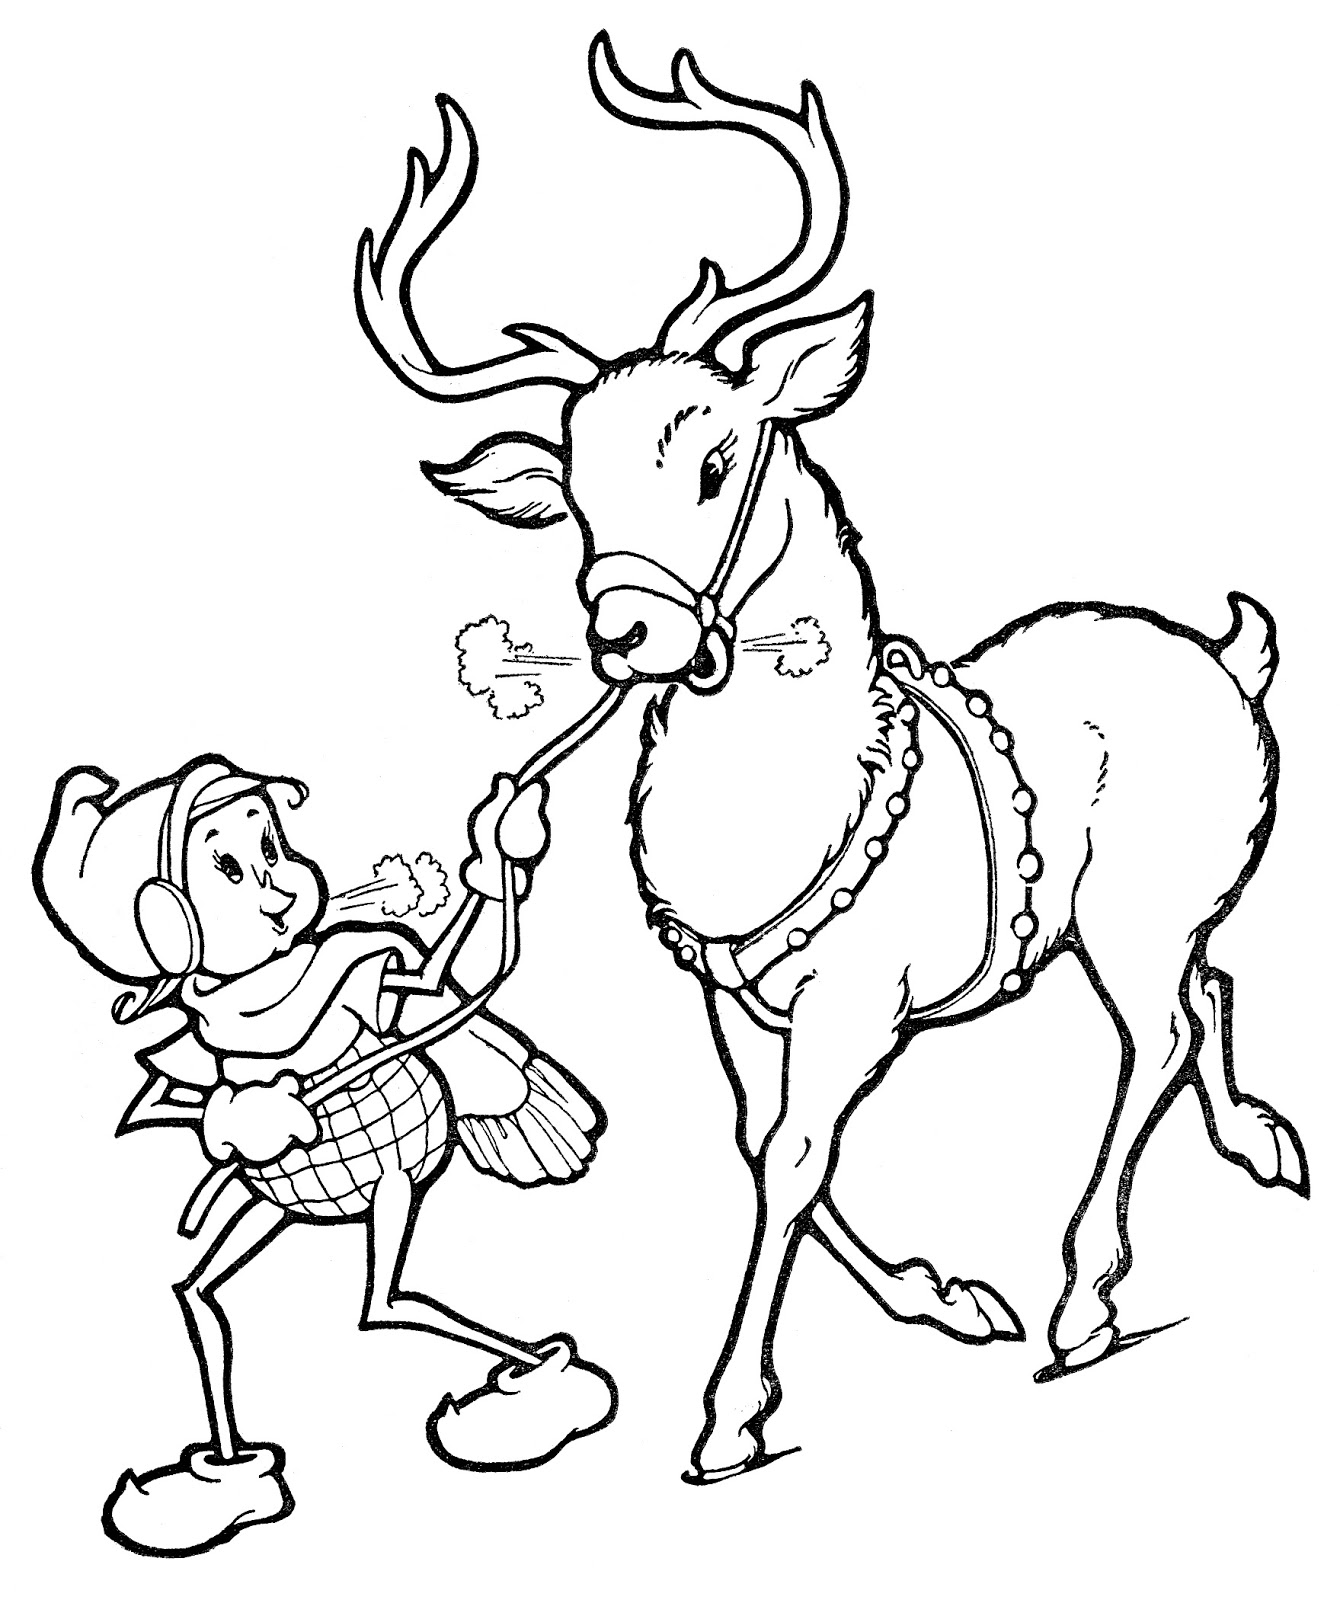 Christmas Line Art - Elf with Reindeer - The Graphics Fairy